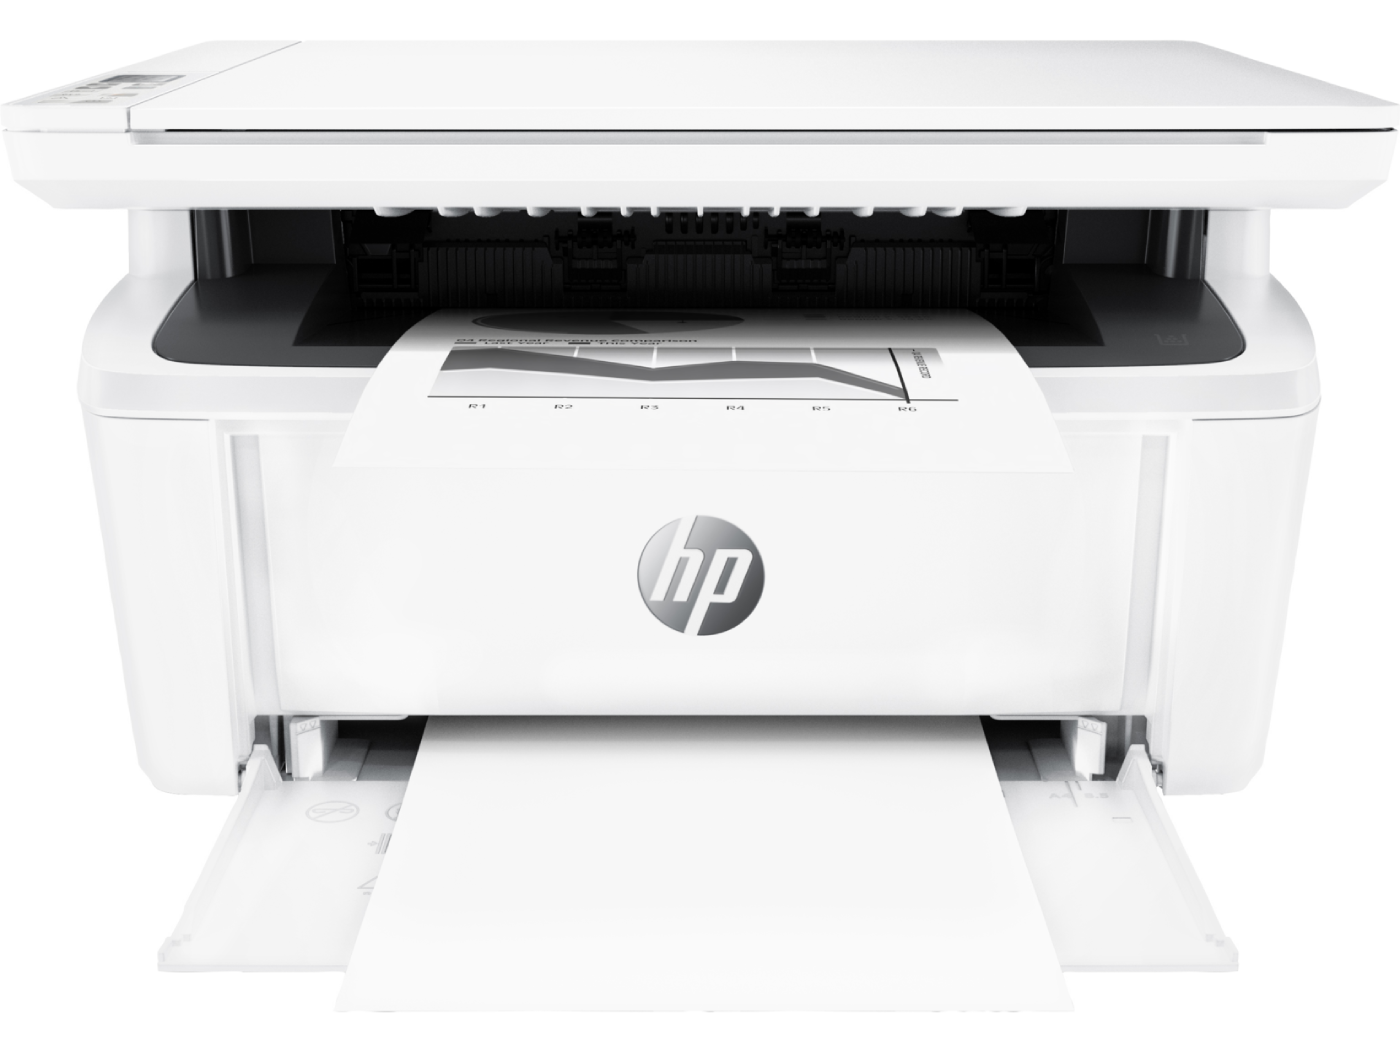 Impresora Hp Laserjet pro mfp m28w monocromo wifi copia escanea w2g55a a4 imprime y usb 2.0 de alta velocidad smart apple airprint pantalla lcd iconos blanca direct 19 ppm 600x600 600 600dpi 18p